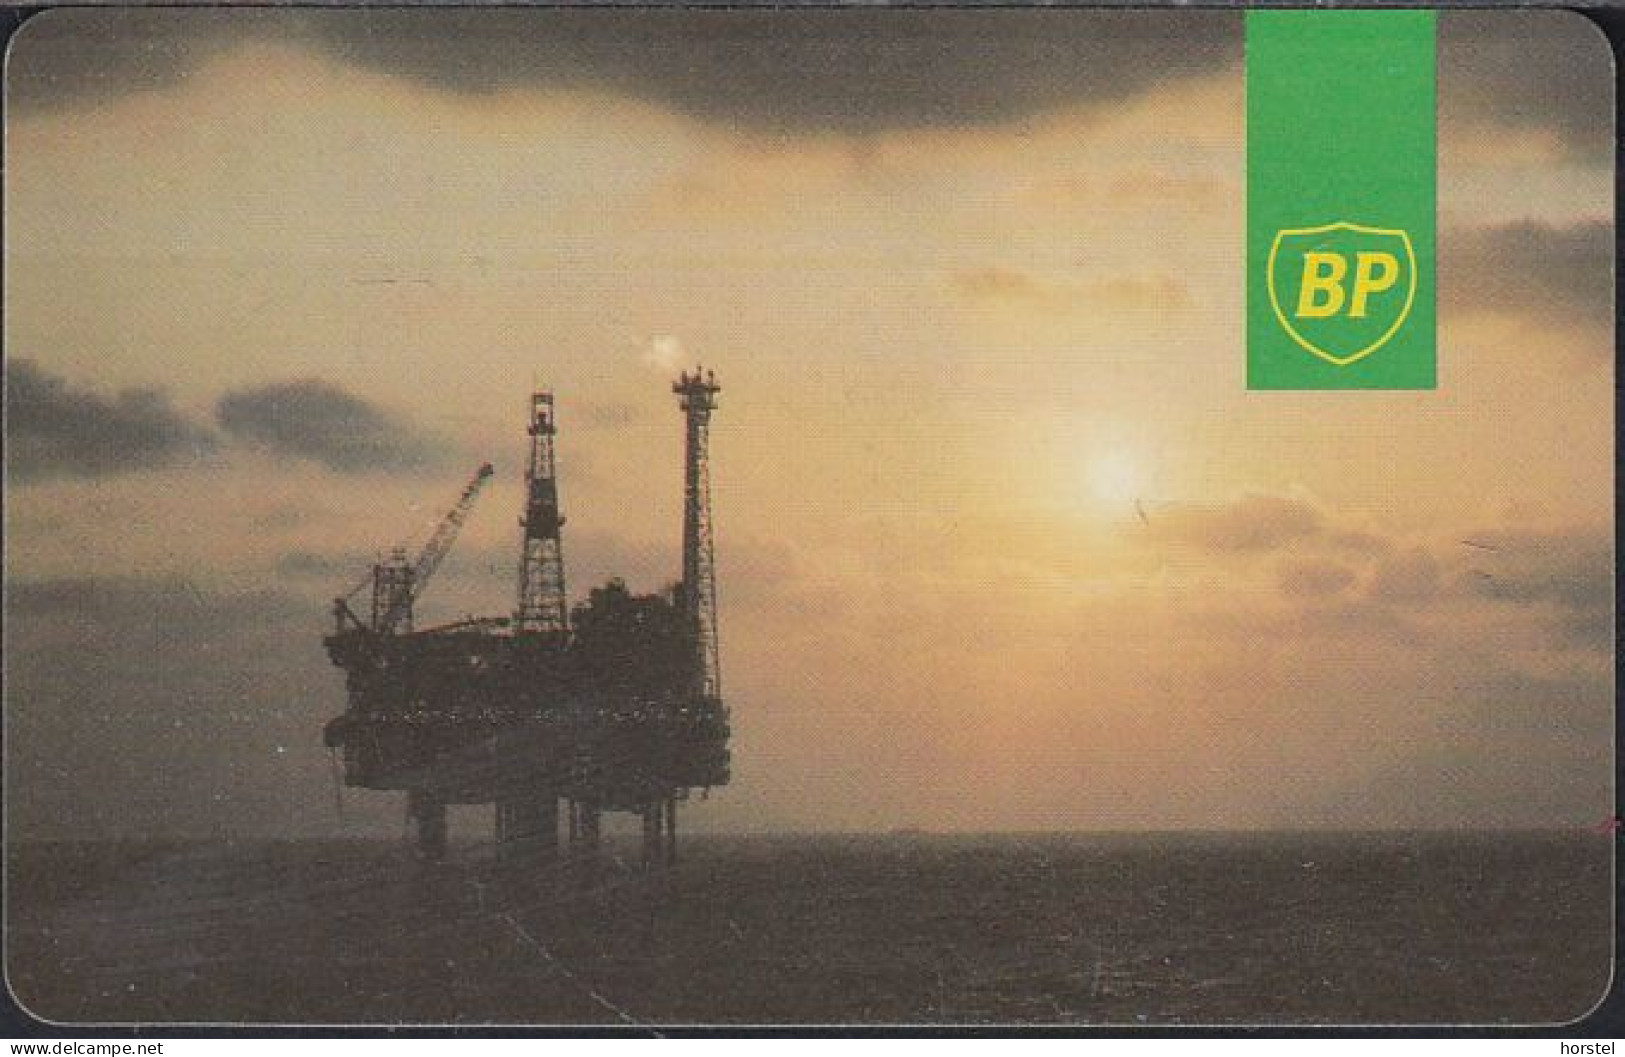 UK - GB-OIL-AUT-0001 Payphone IPL Autelca - BP - Oil Bohrinsel - 20 Units - Mint - [ 2] Oil Drilling Rig